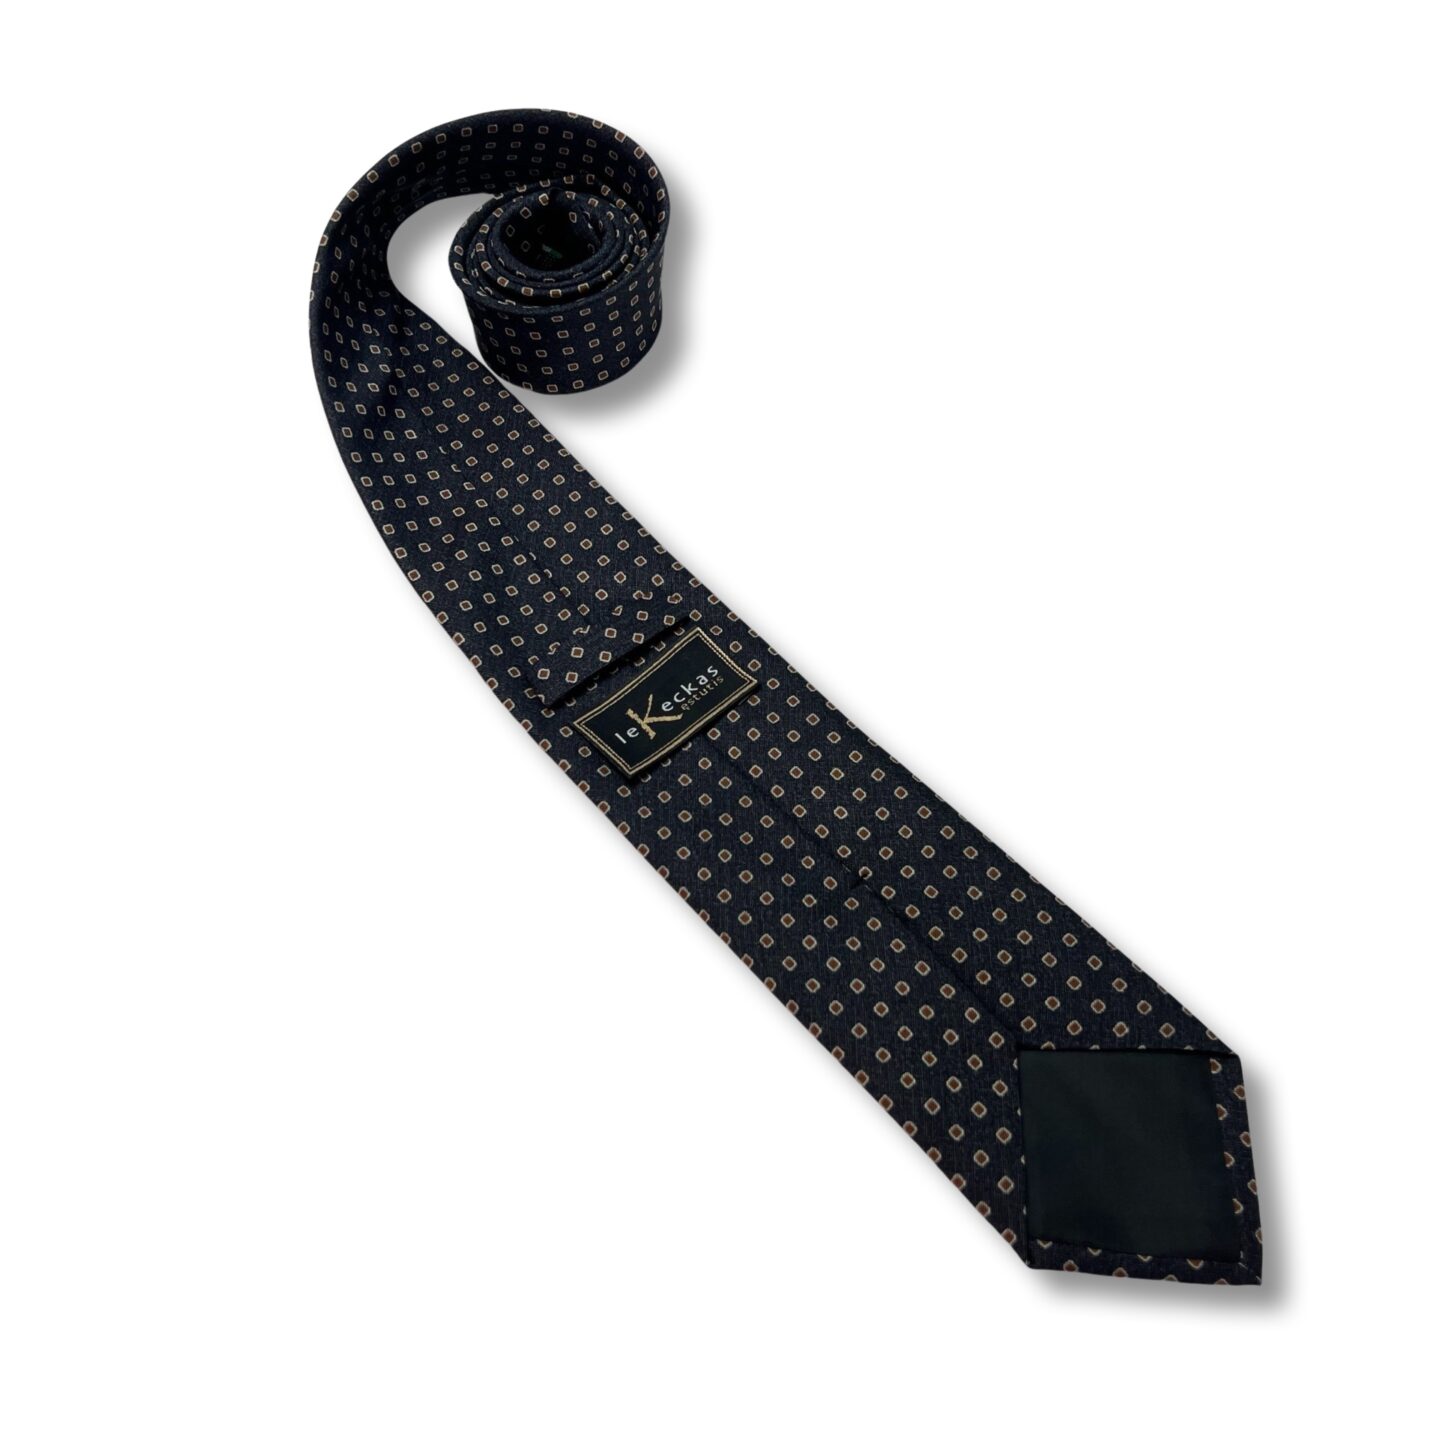 Pilkas kaklaraištis su rudu kvadrateliu rastu